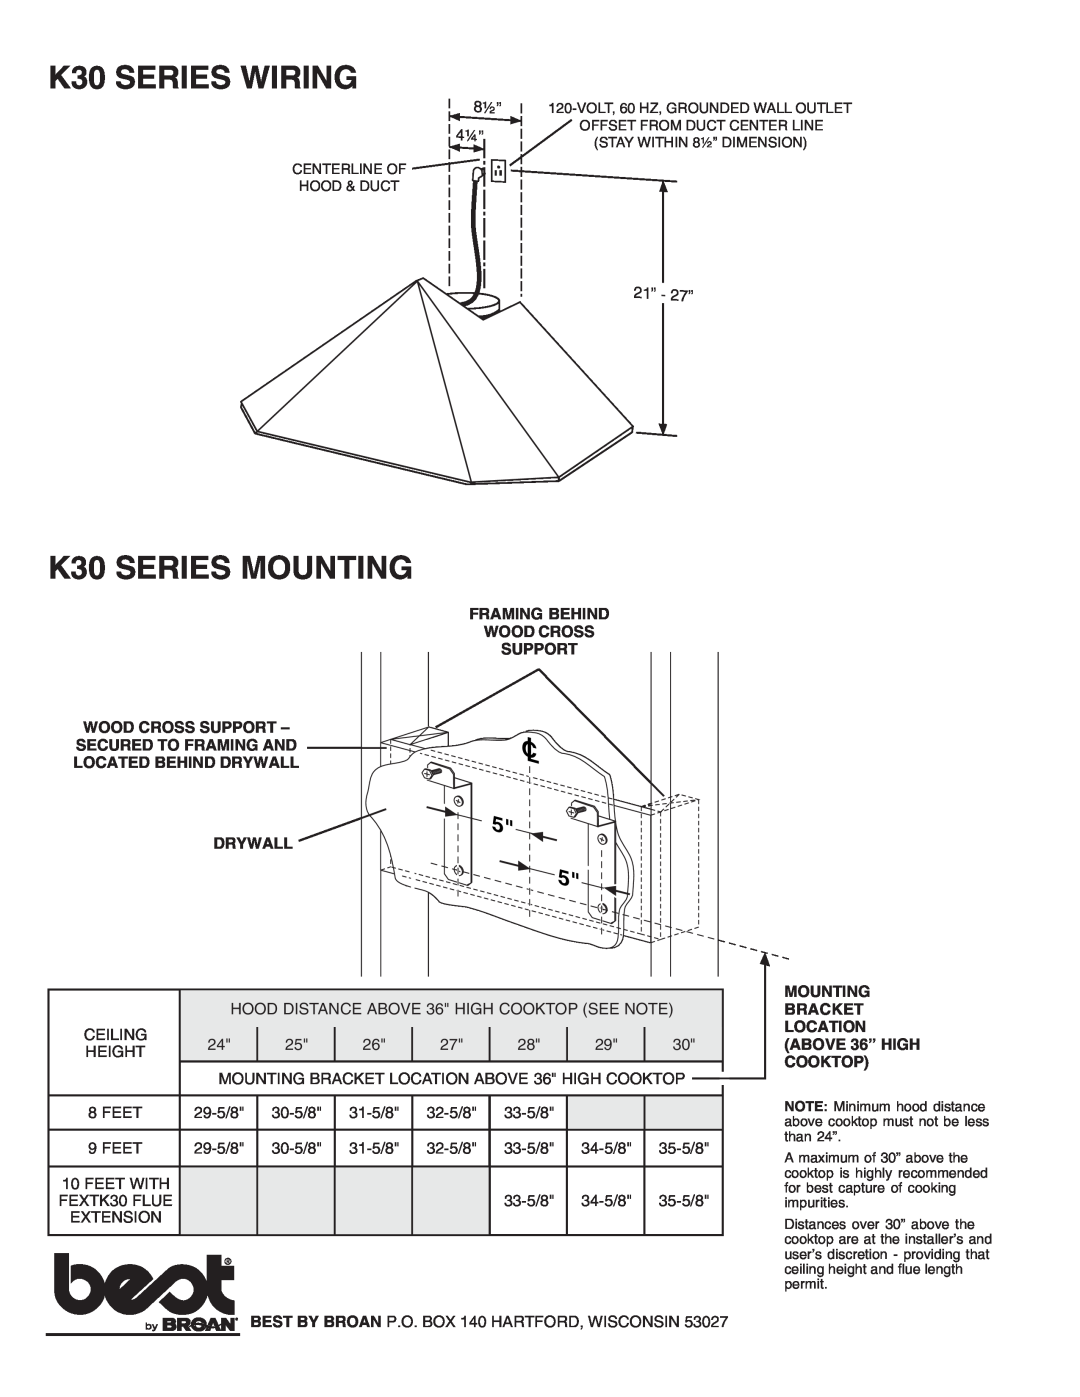 Best K30 Series specifications K30 SERIES WIRING, K30 SERIES MOUNTING, Cl L, 8½” 4¼”, 21” - 27” 